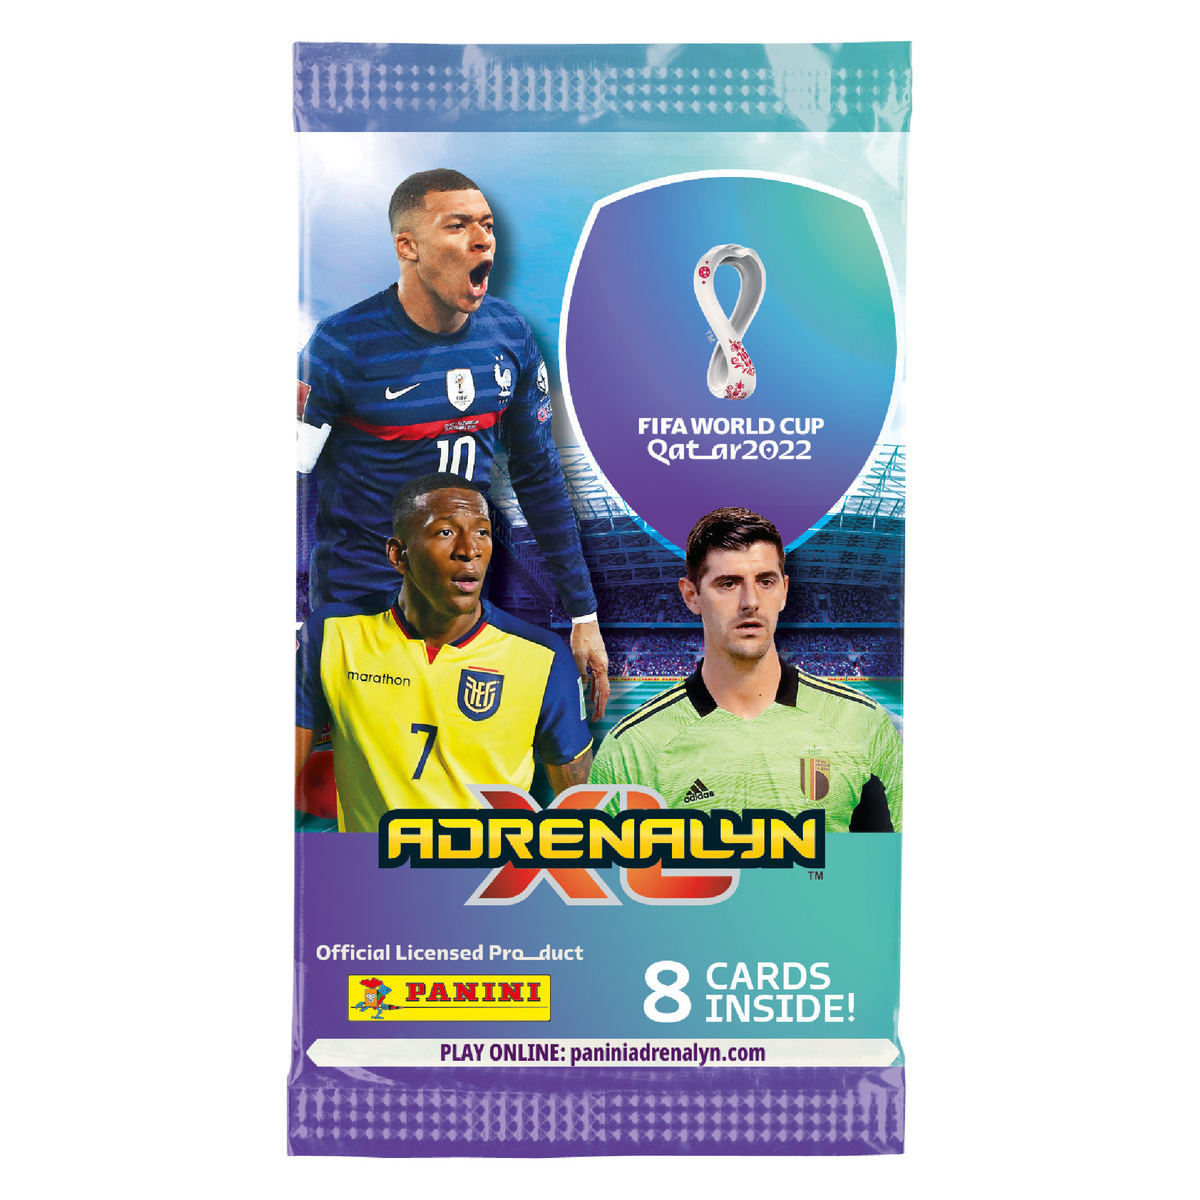 Pocket Box Adrenalyn World Cup 2022 Panini 